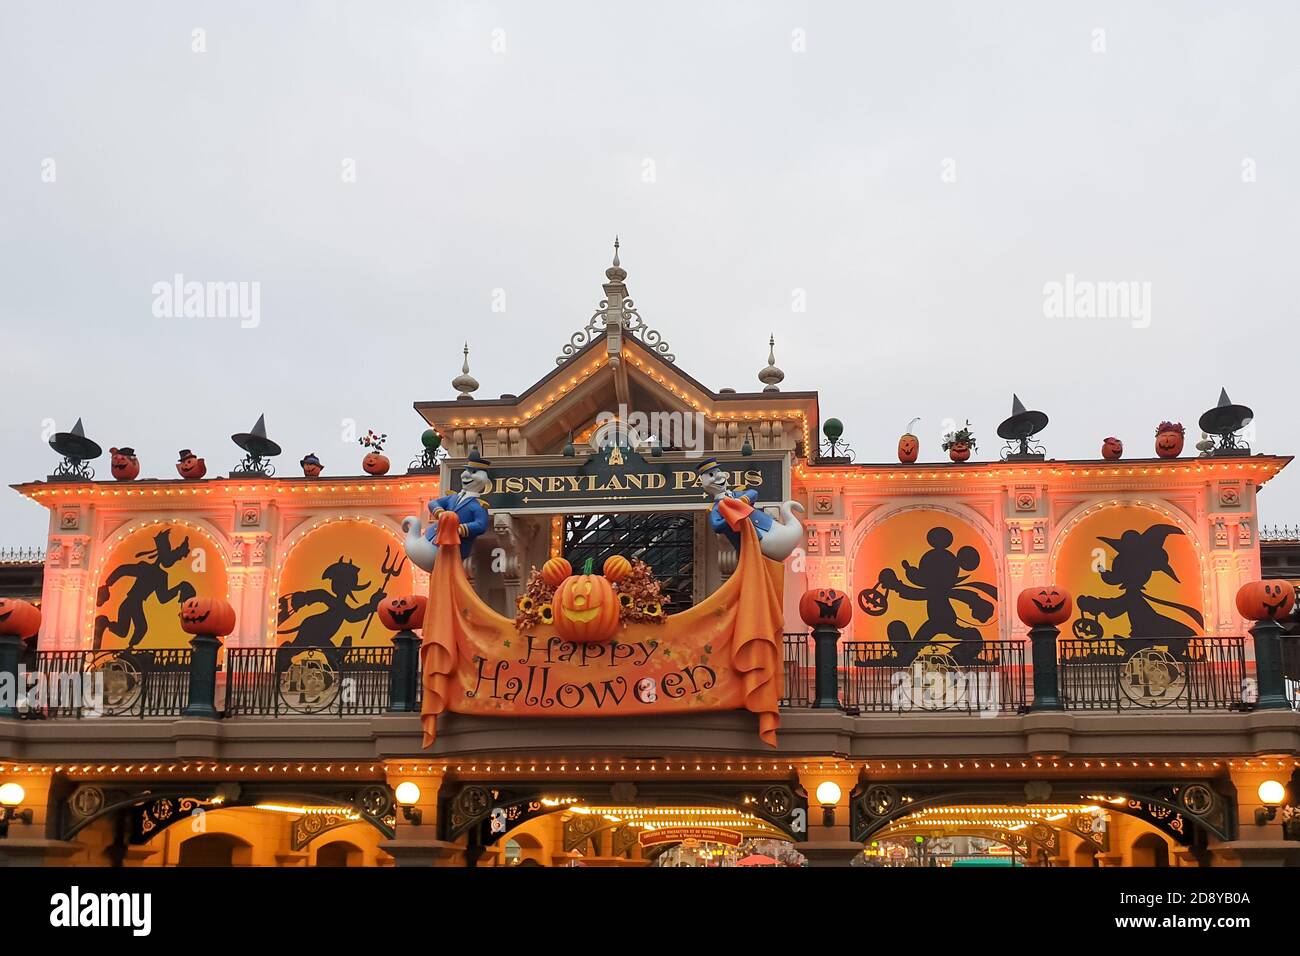 Chessy, France - October 10, 2020: Season Halloween in Disneyland Paris before another closure due to the coronavirus crisis. Stock Photo